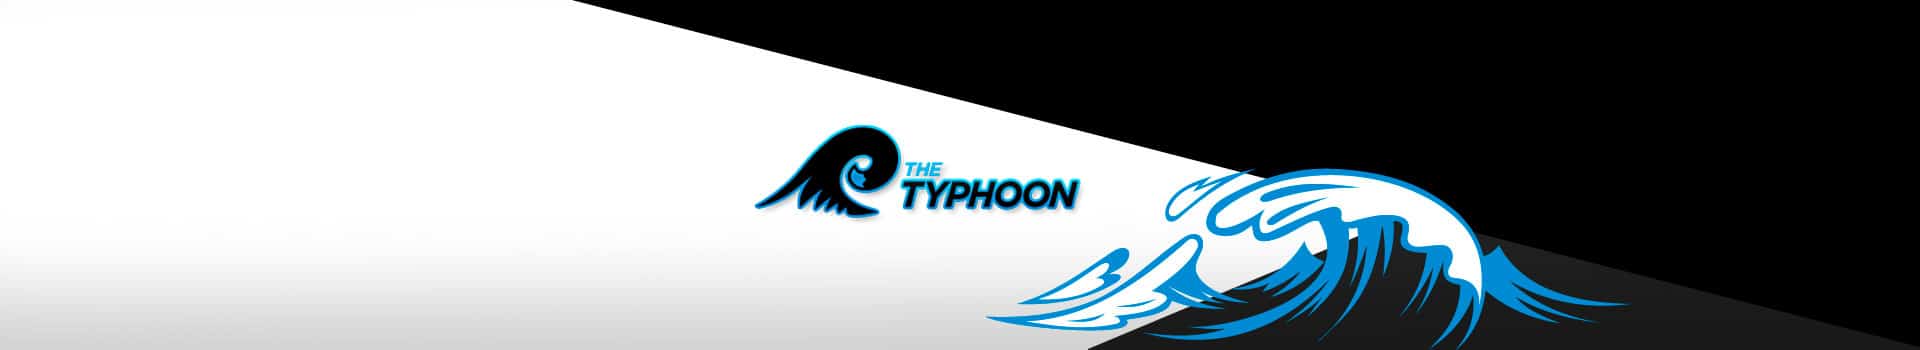 Турнир Typhoon 888poker